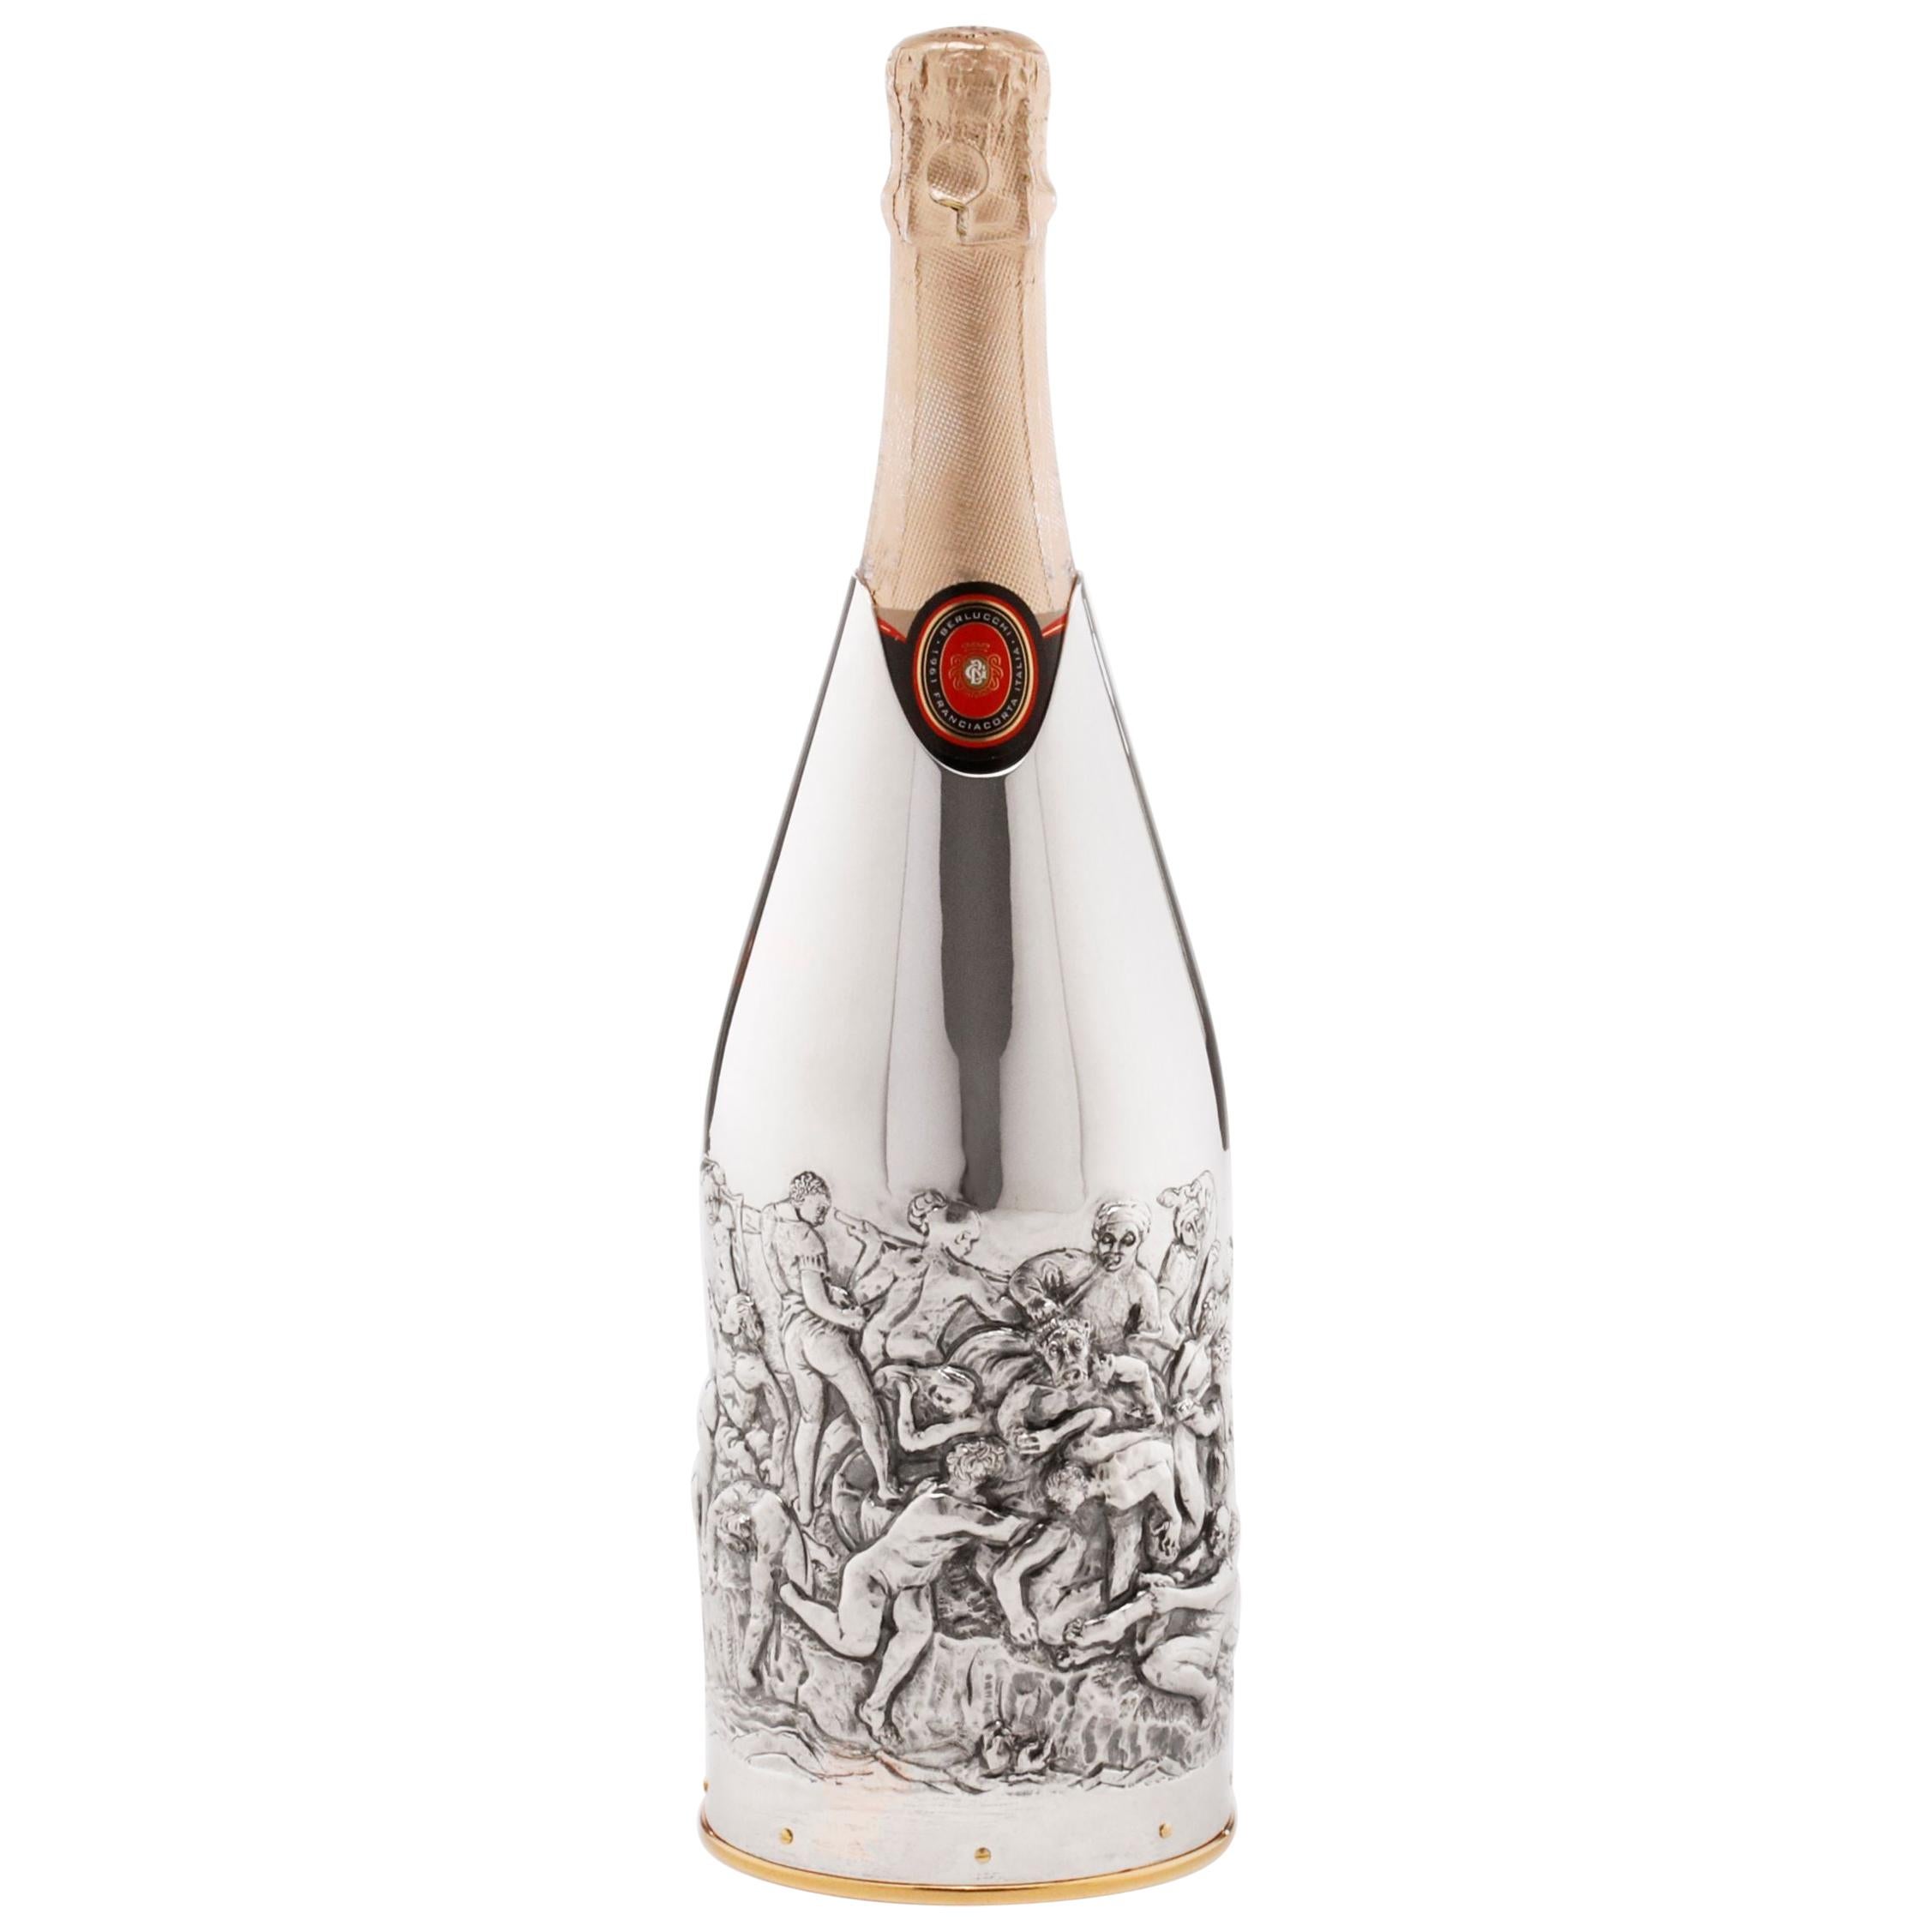 Champagnerfarbener Deckel aus massivem reinen Silber, Battaglia di Cascina, 2019